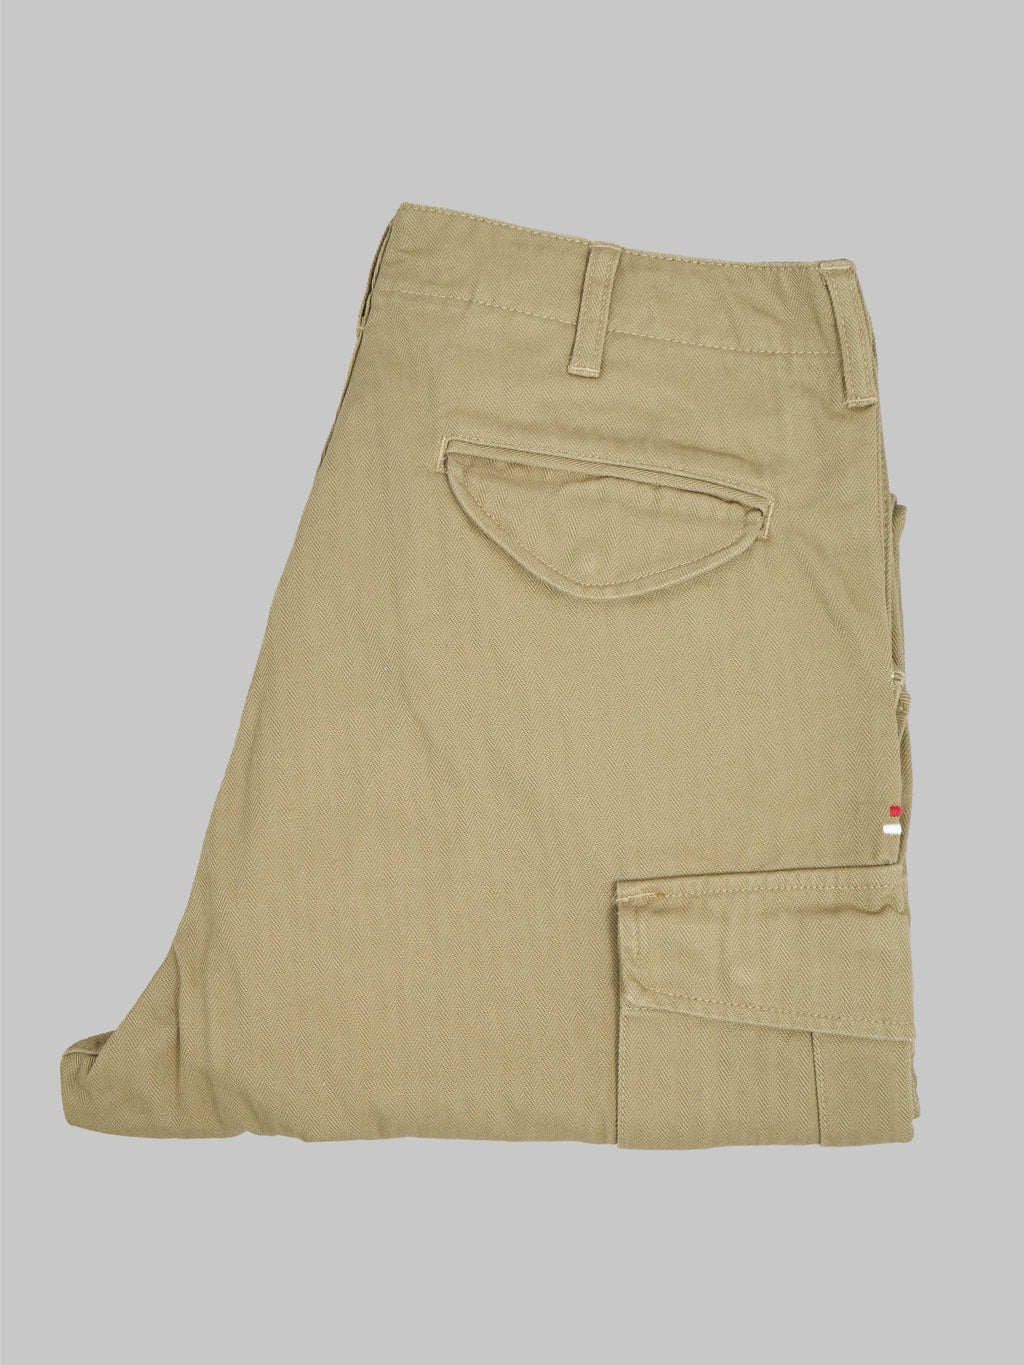 Tanuki Herringbone M-65 Pants Khaki Beige